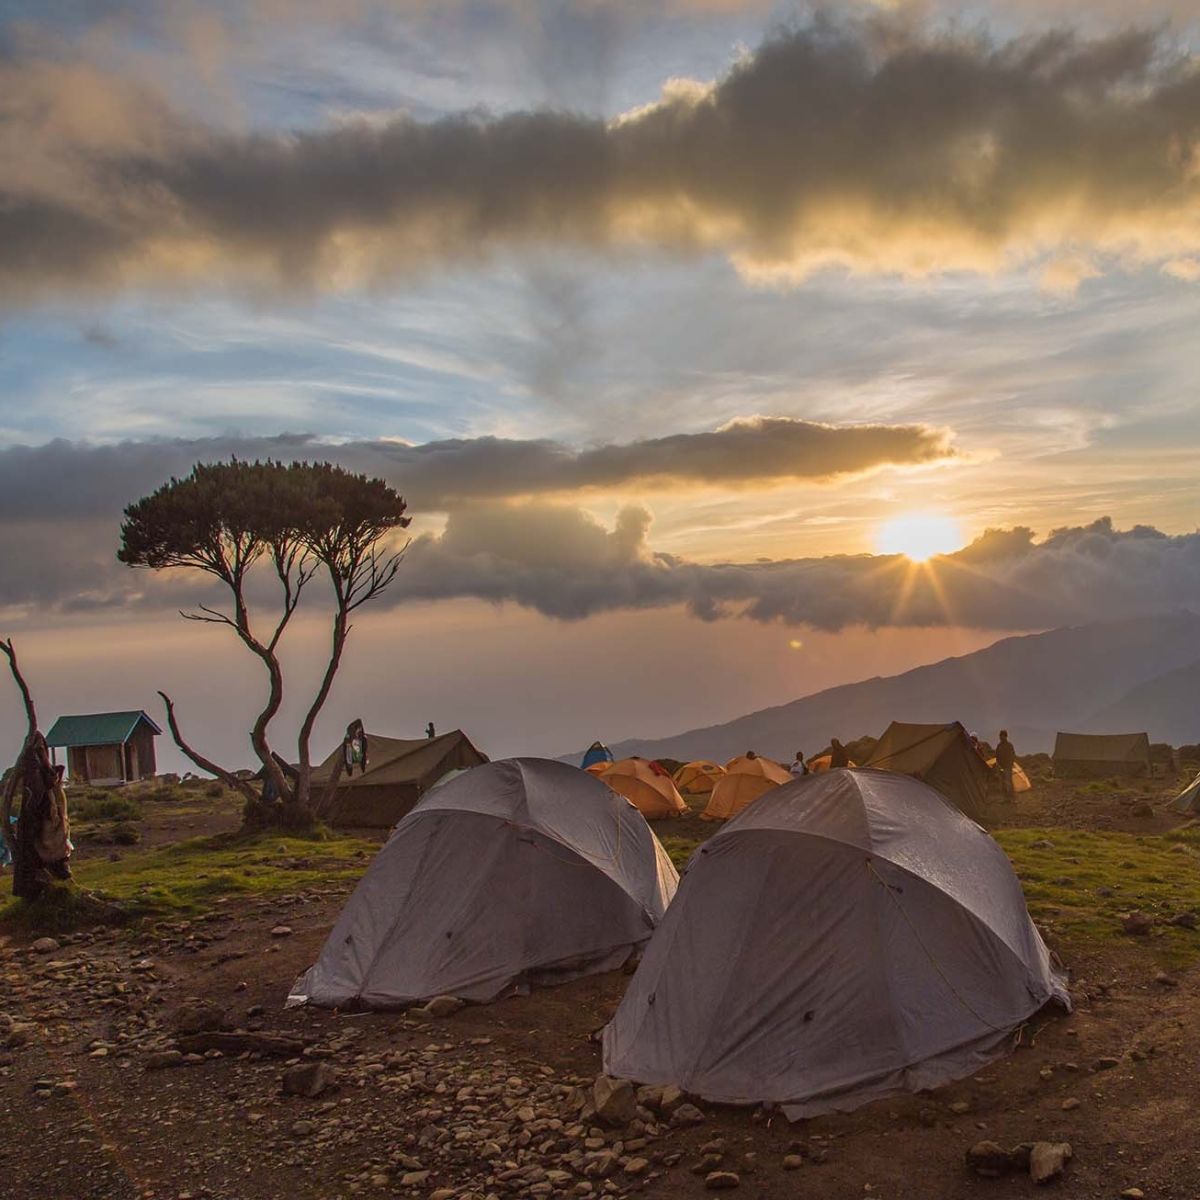 Sunrise at Shira Camp on Kilimanjaro